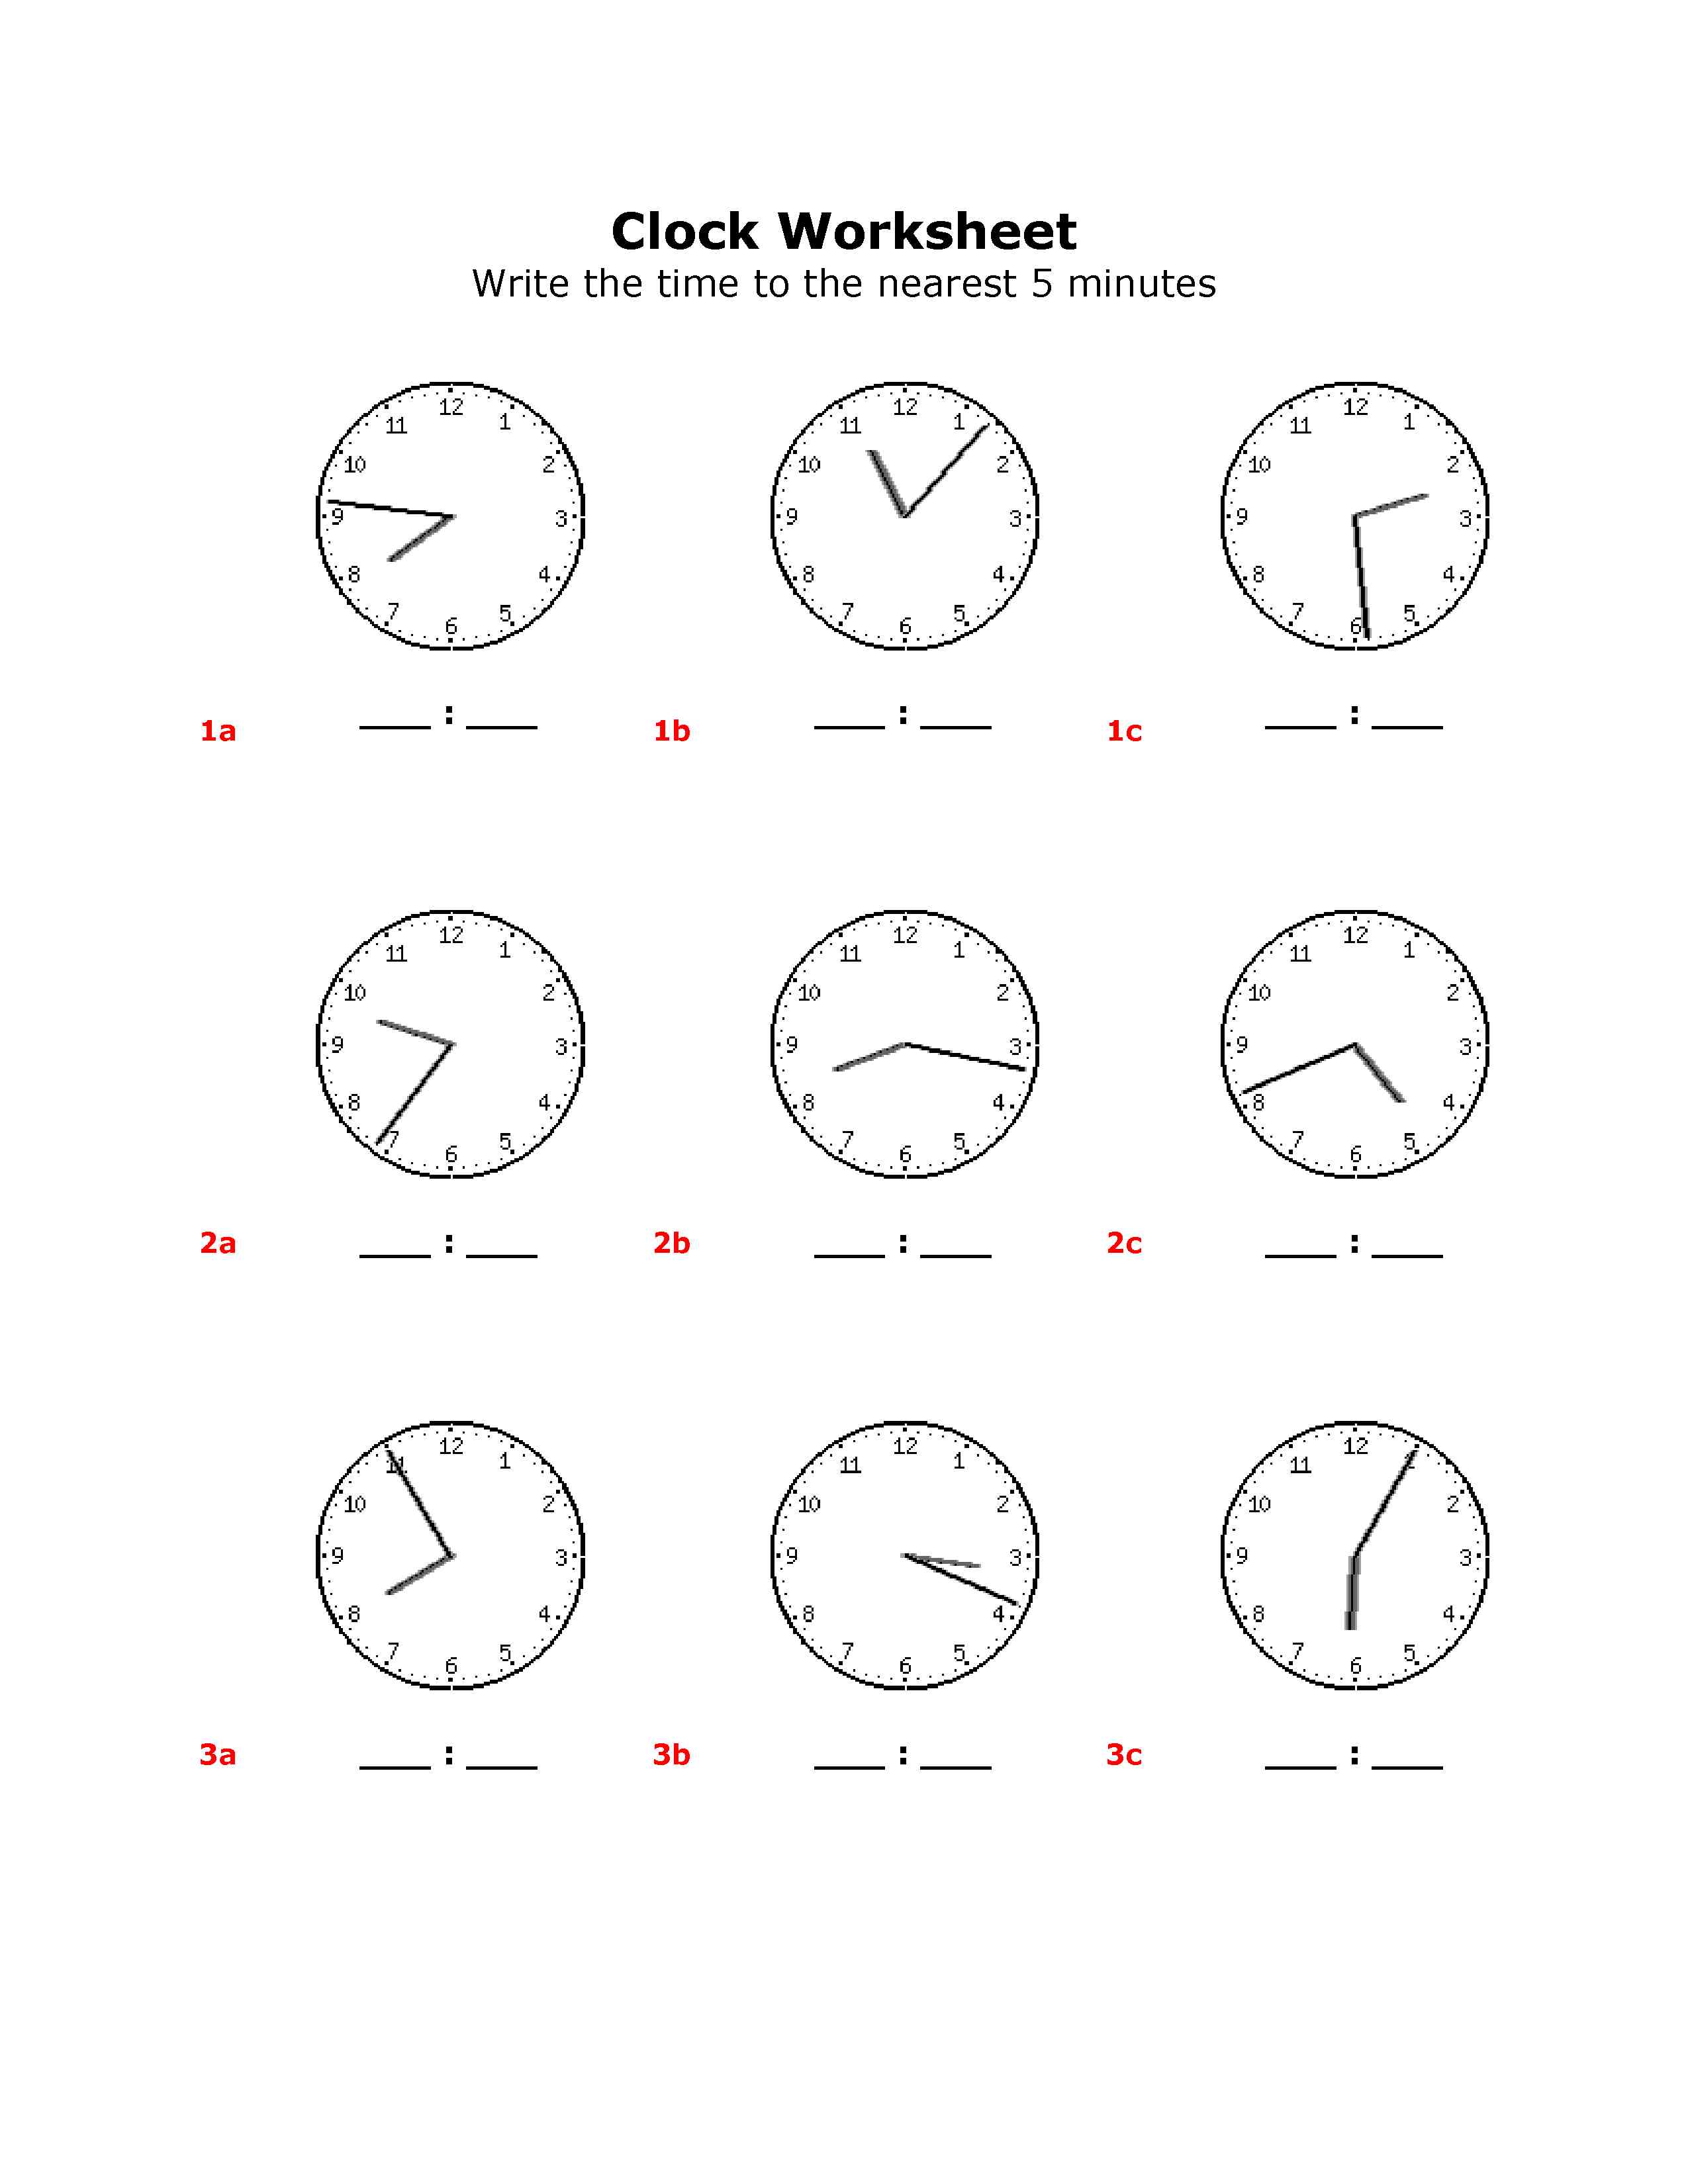 Clock Worksheets Grade 3 Image